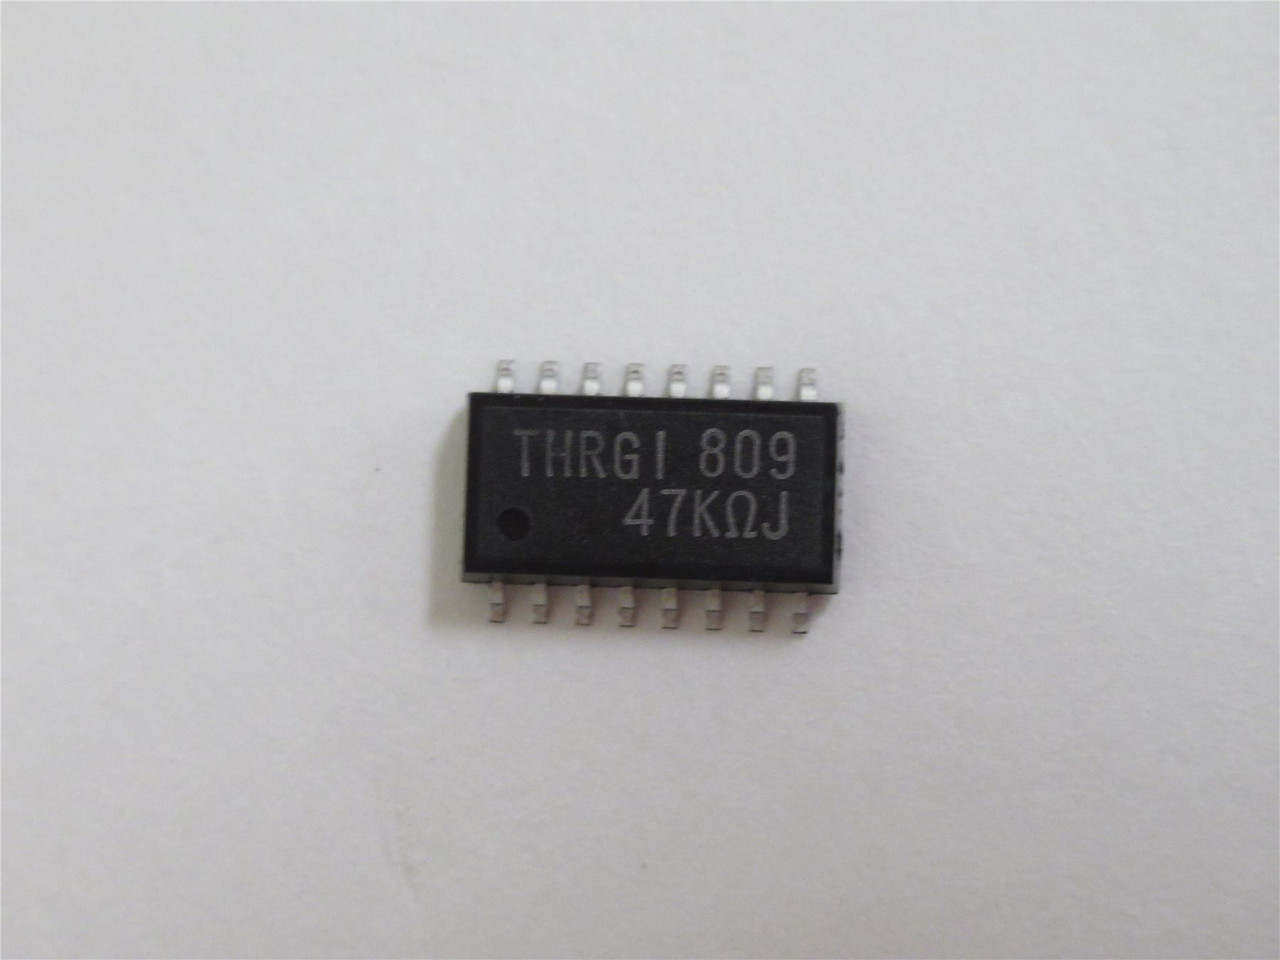 MFG- THRGI 809; Lot-15 IC Chip 47kOhm